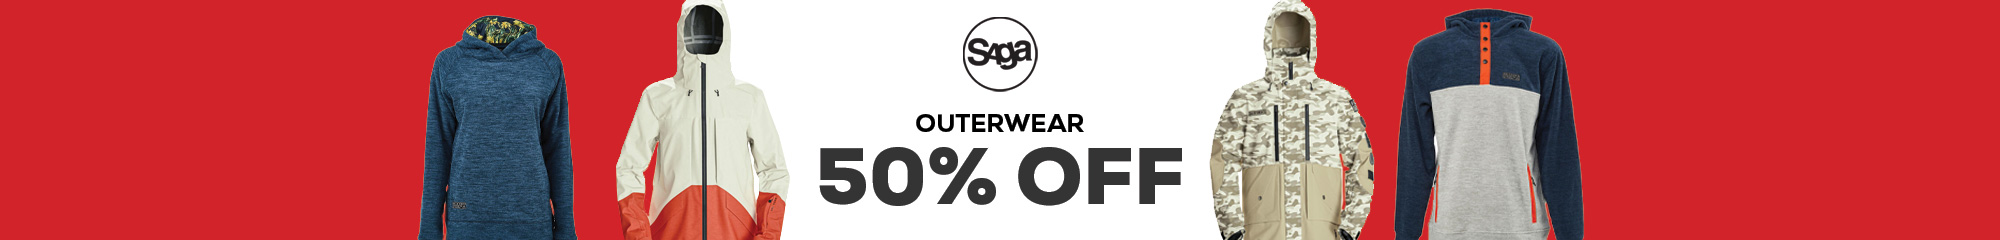 Saga Outerwear up to 50% Off